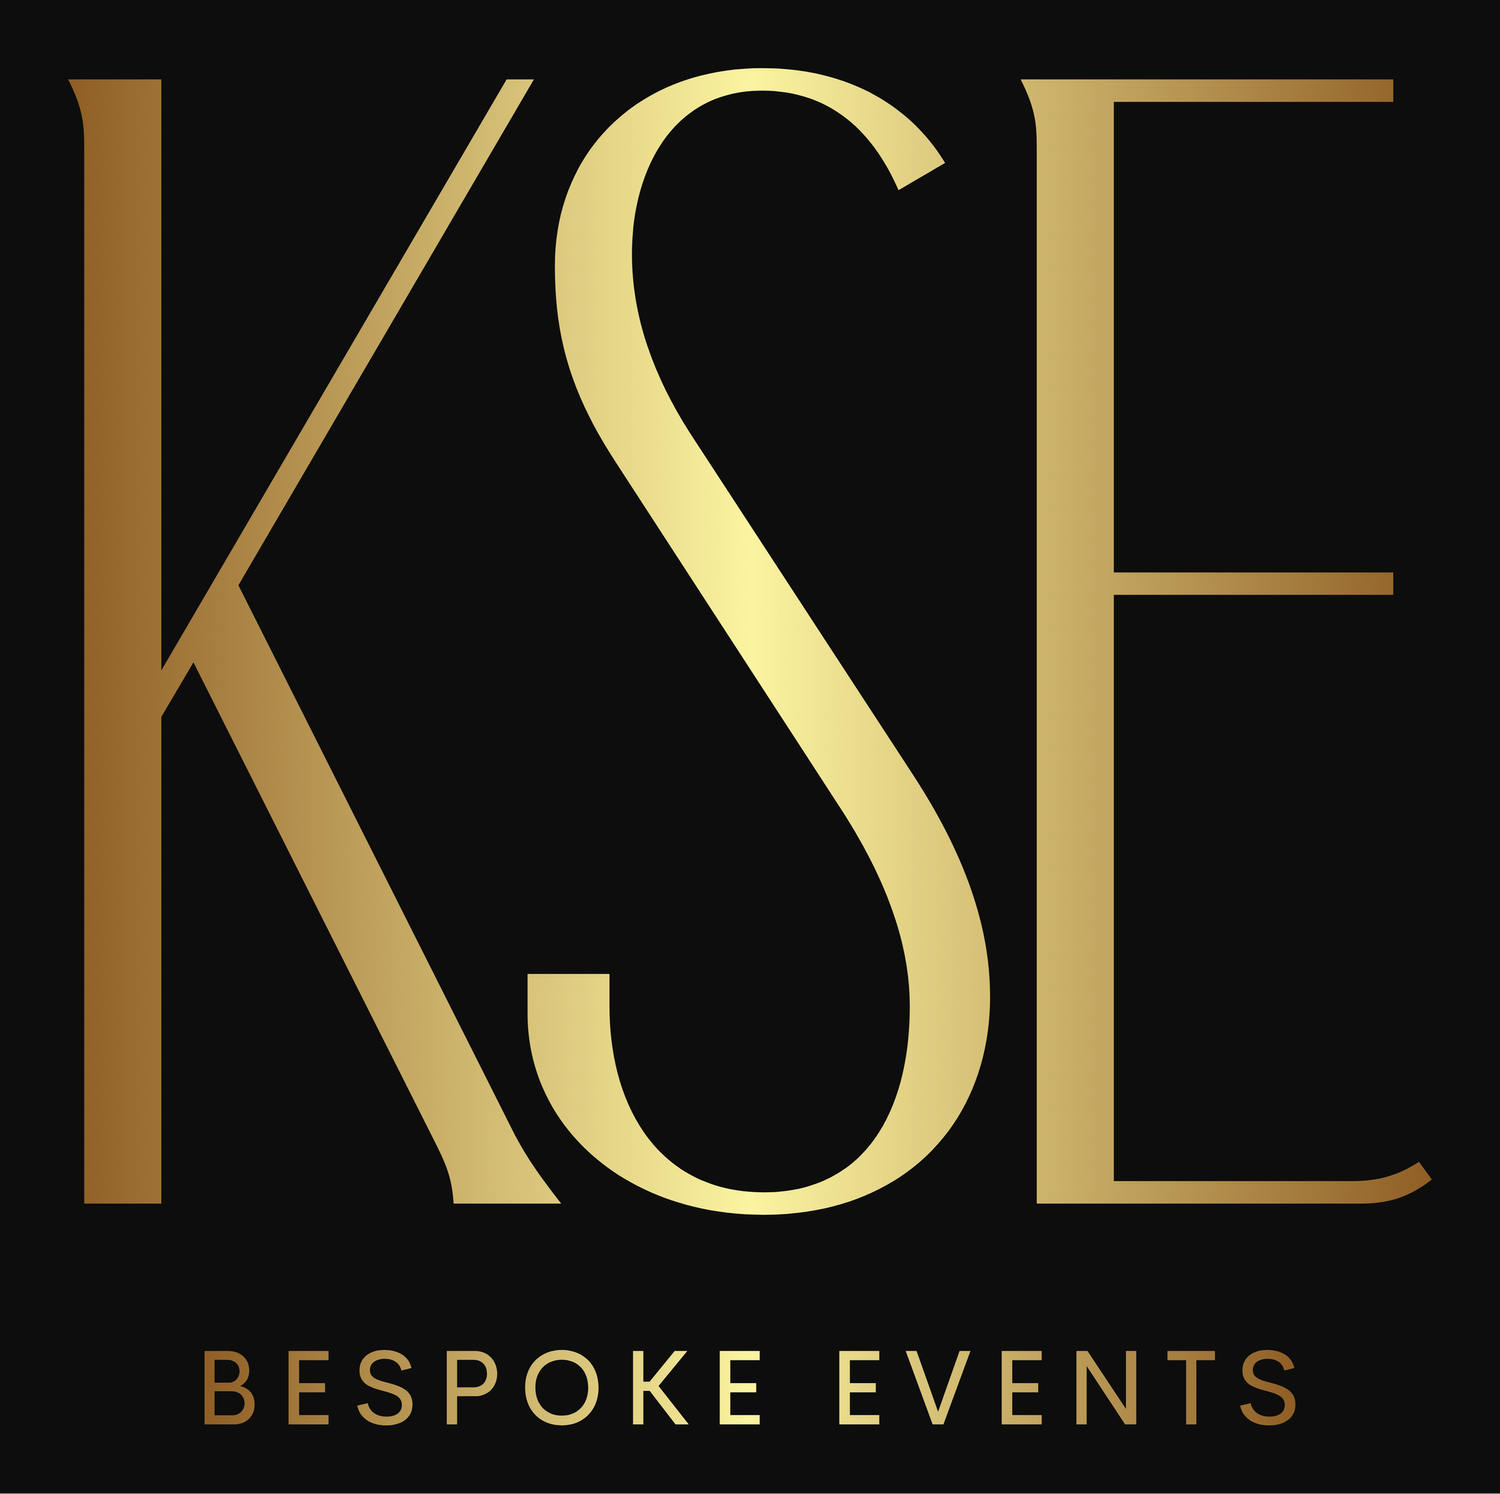 KSE Bespoke Events